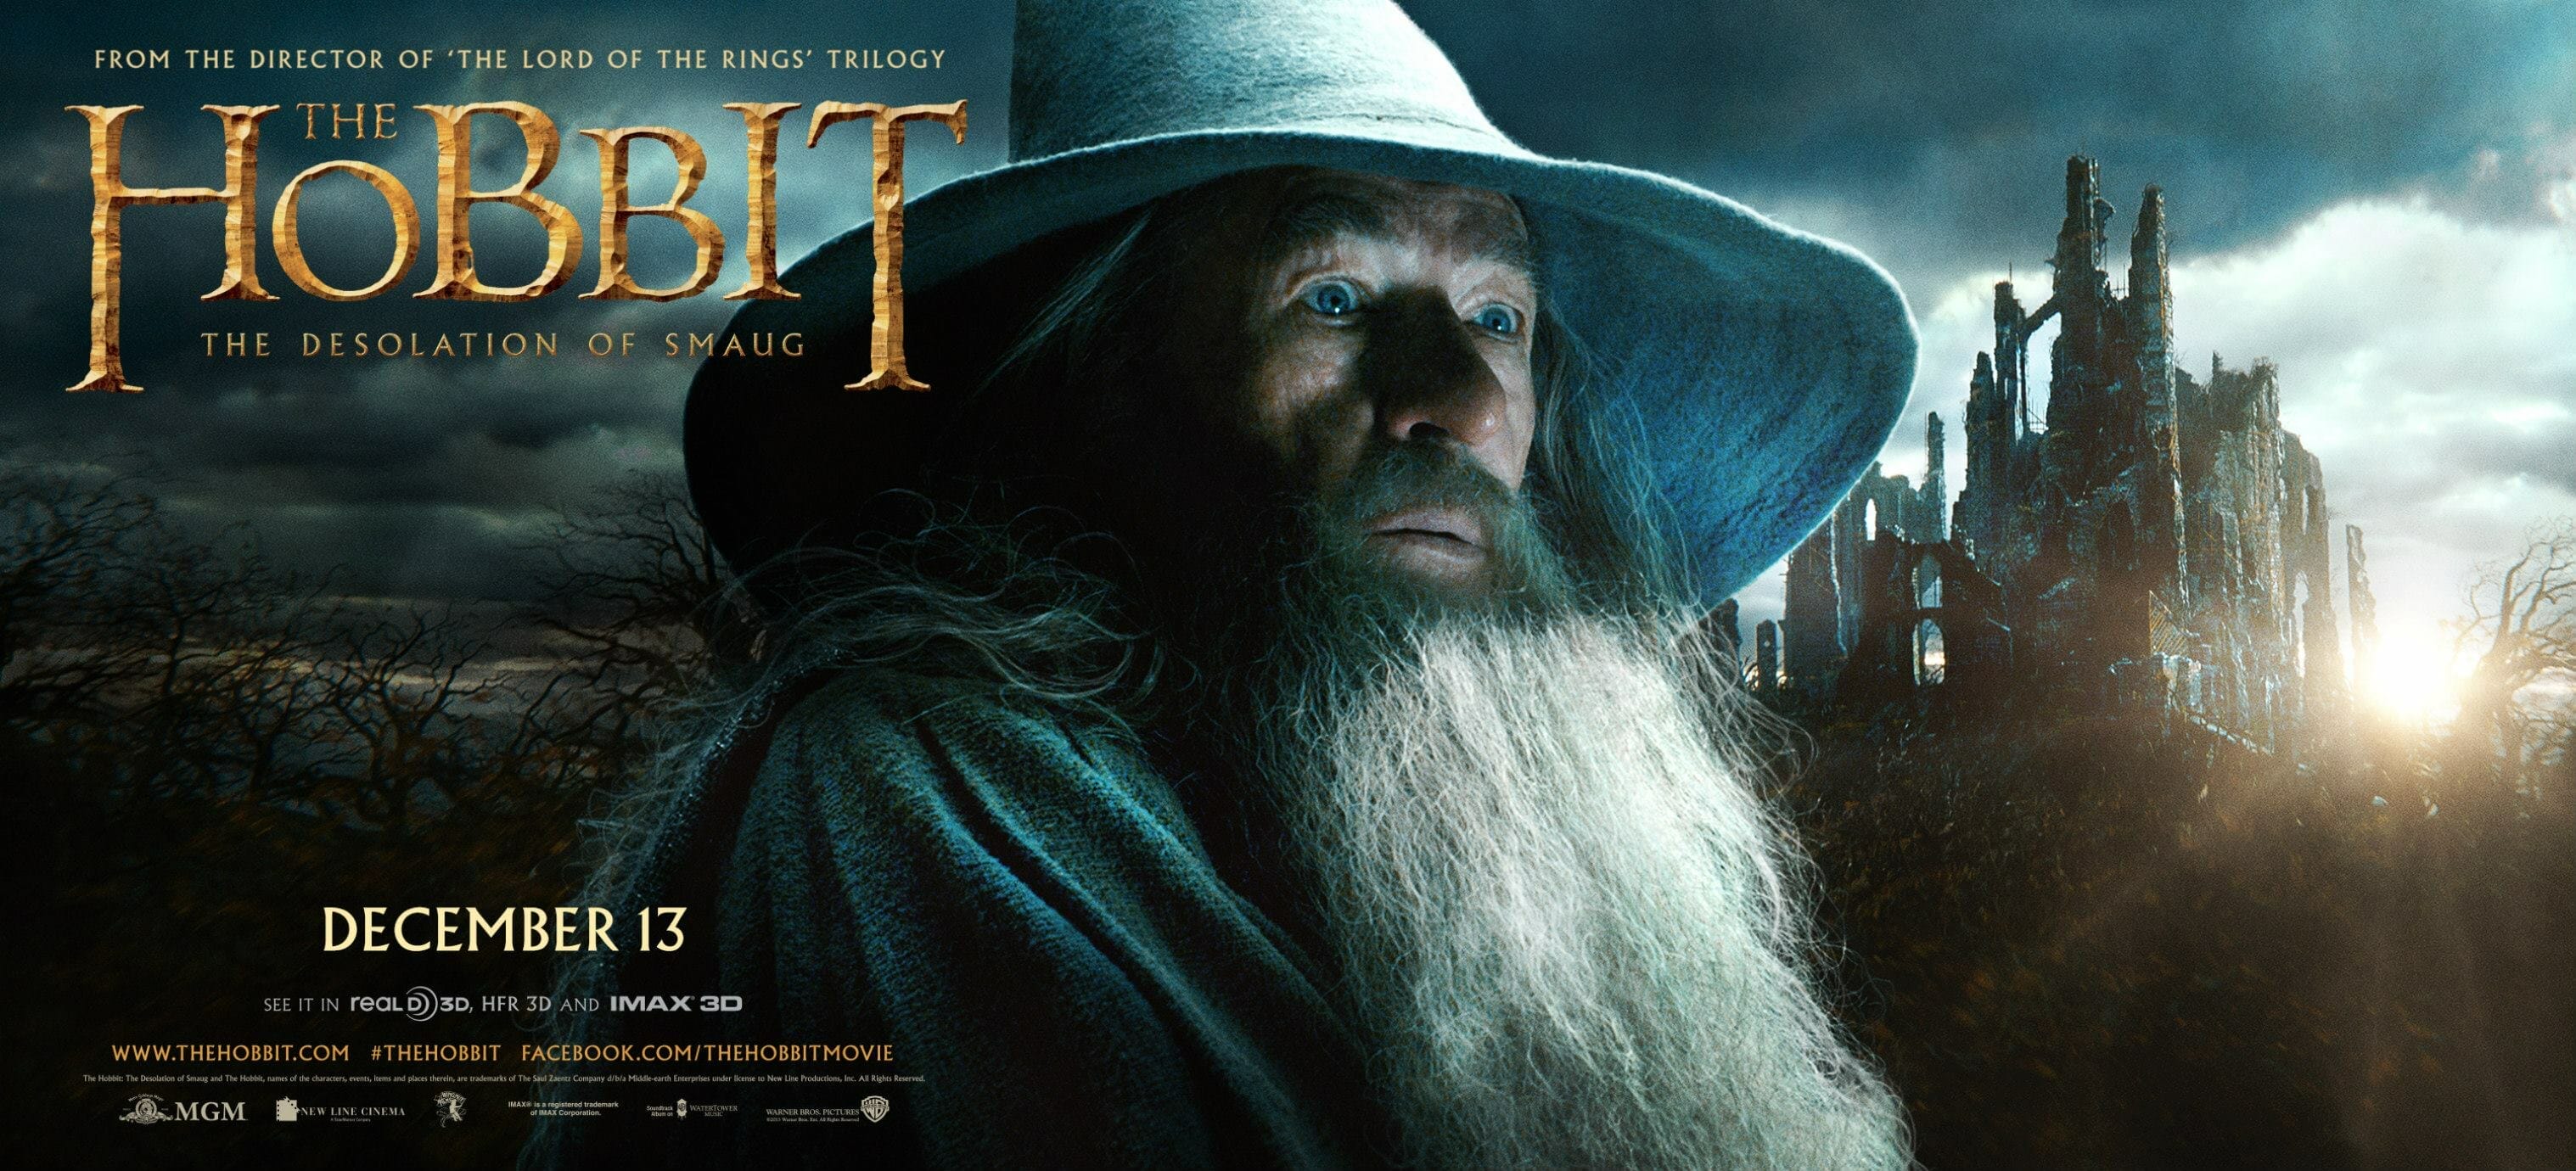 Gandalf-The Hobbit-Smaug